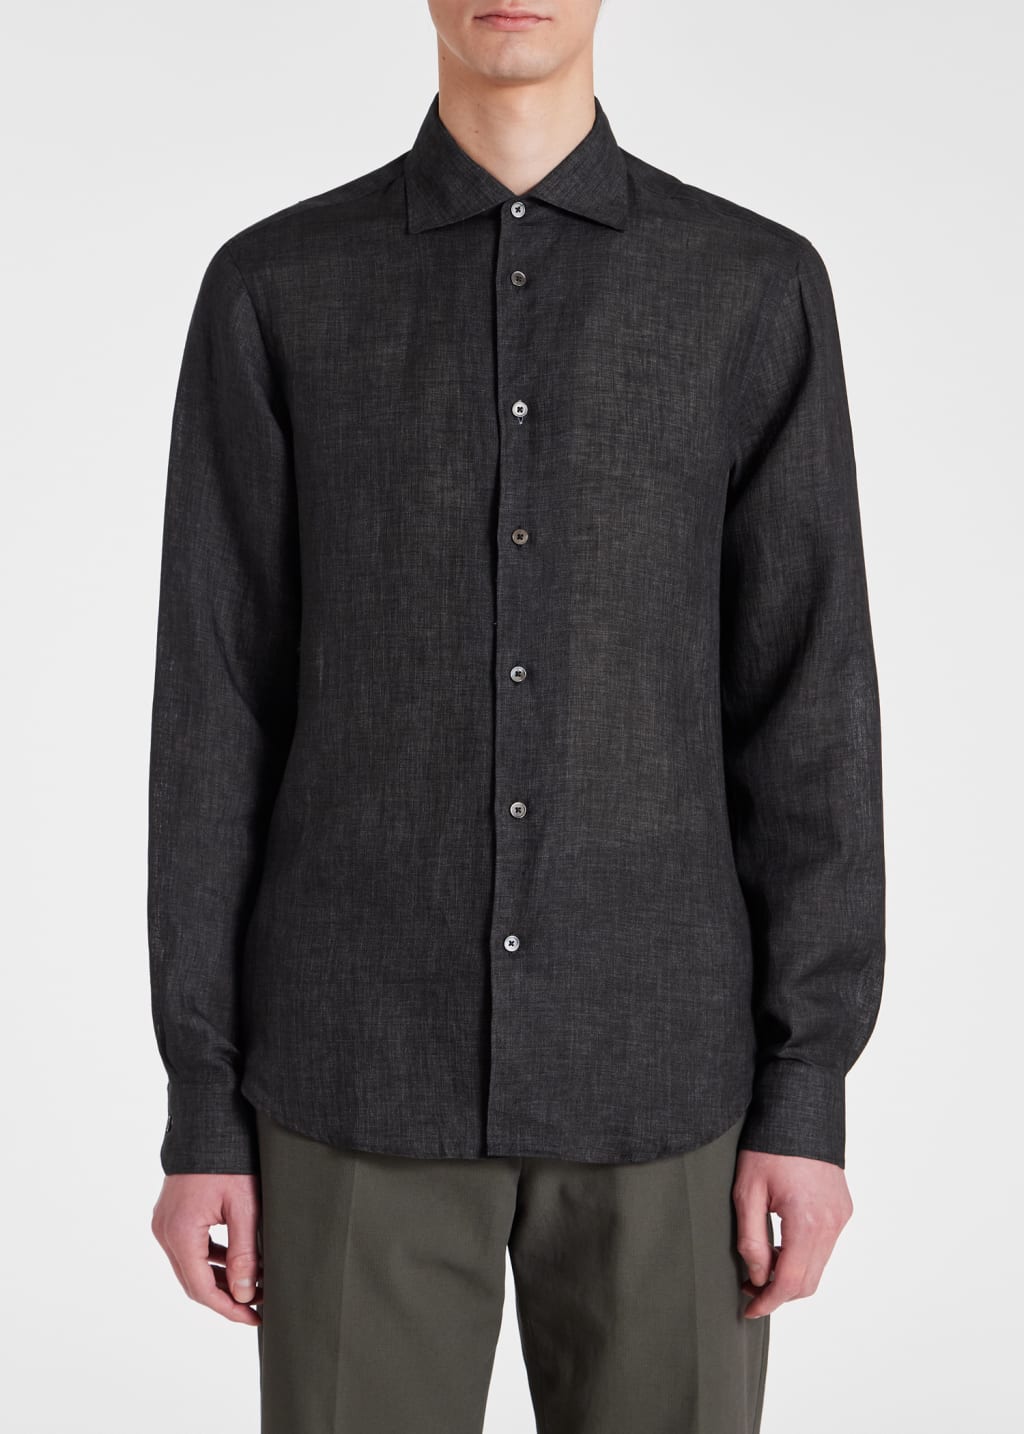 Model View - Slim-Fit Charcoal Grey Linen Shirt Paul Smith